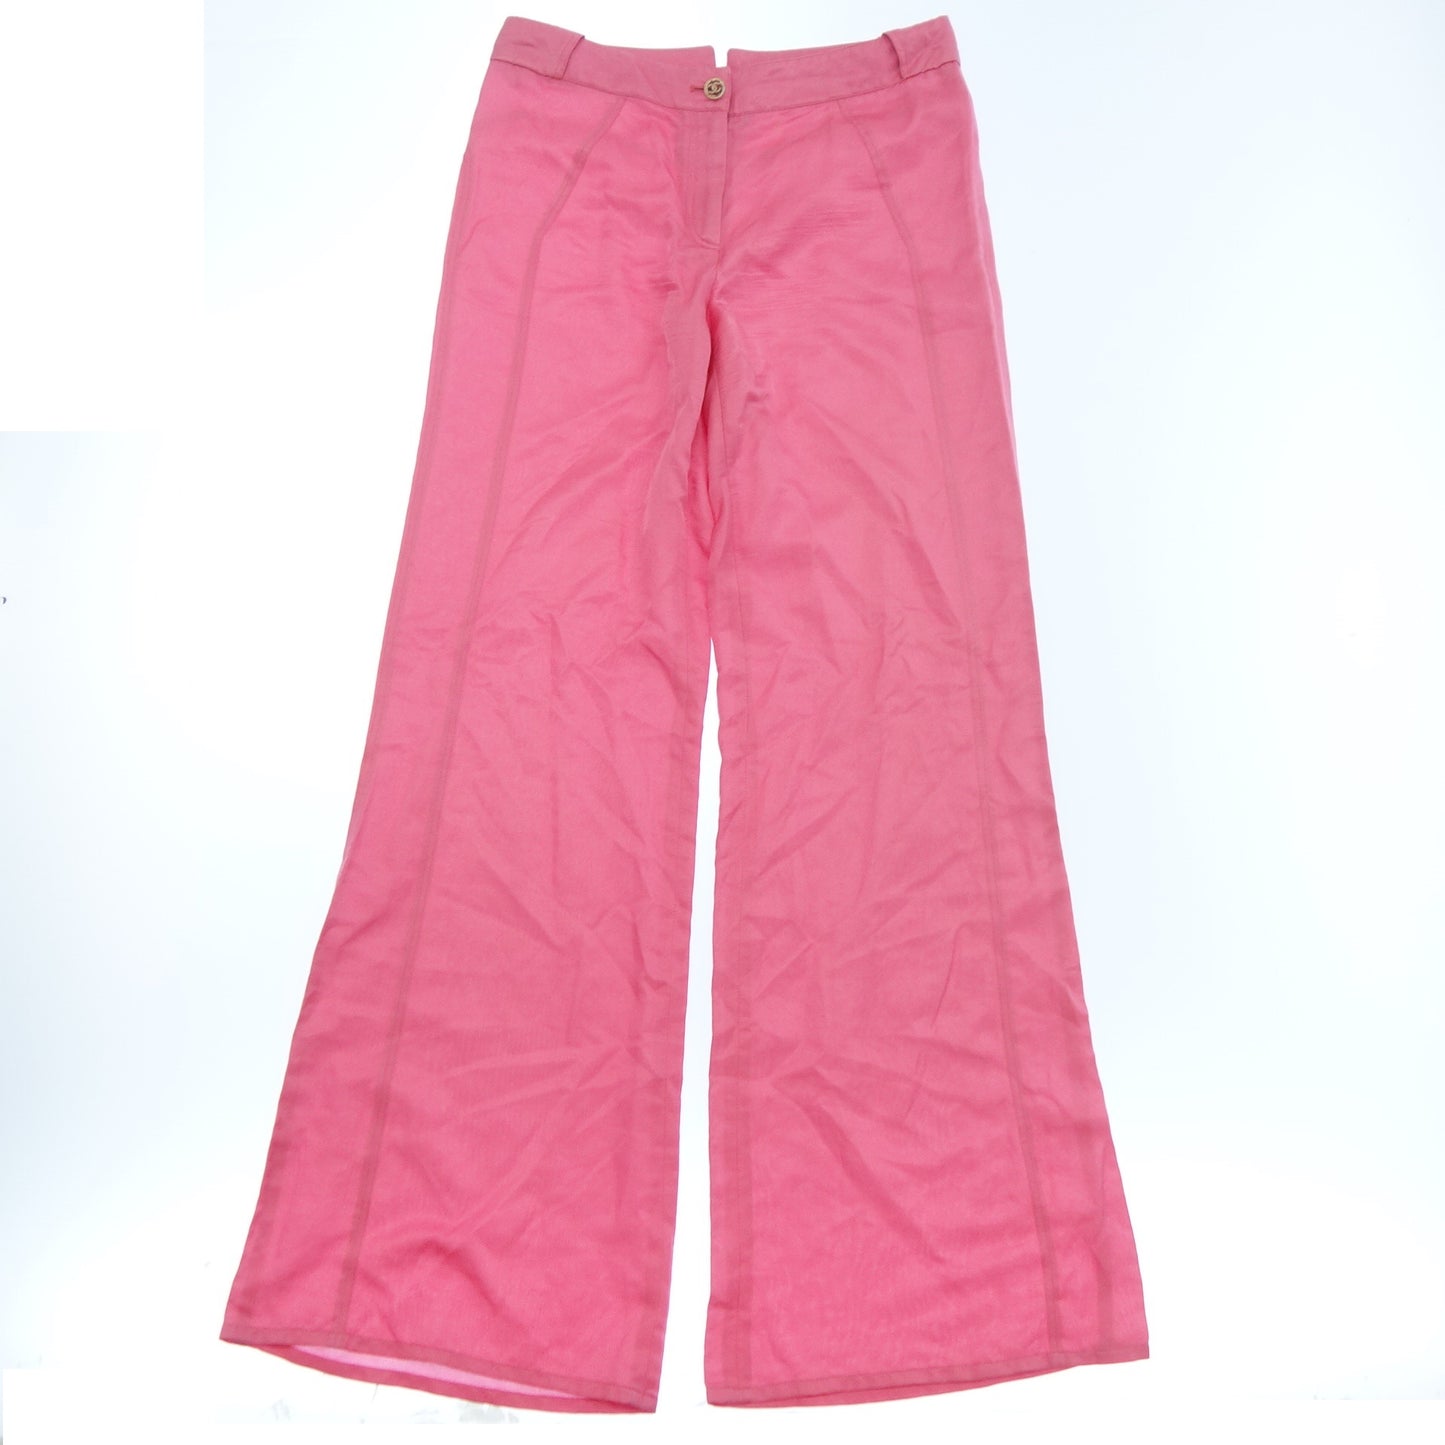 二手的 ◆CHANEL 丝绸裤子这里标记 P39 尺寸 38 女士粉红色 CHANEL [AFB25] 